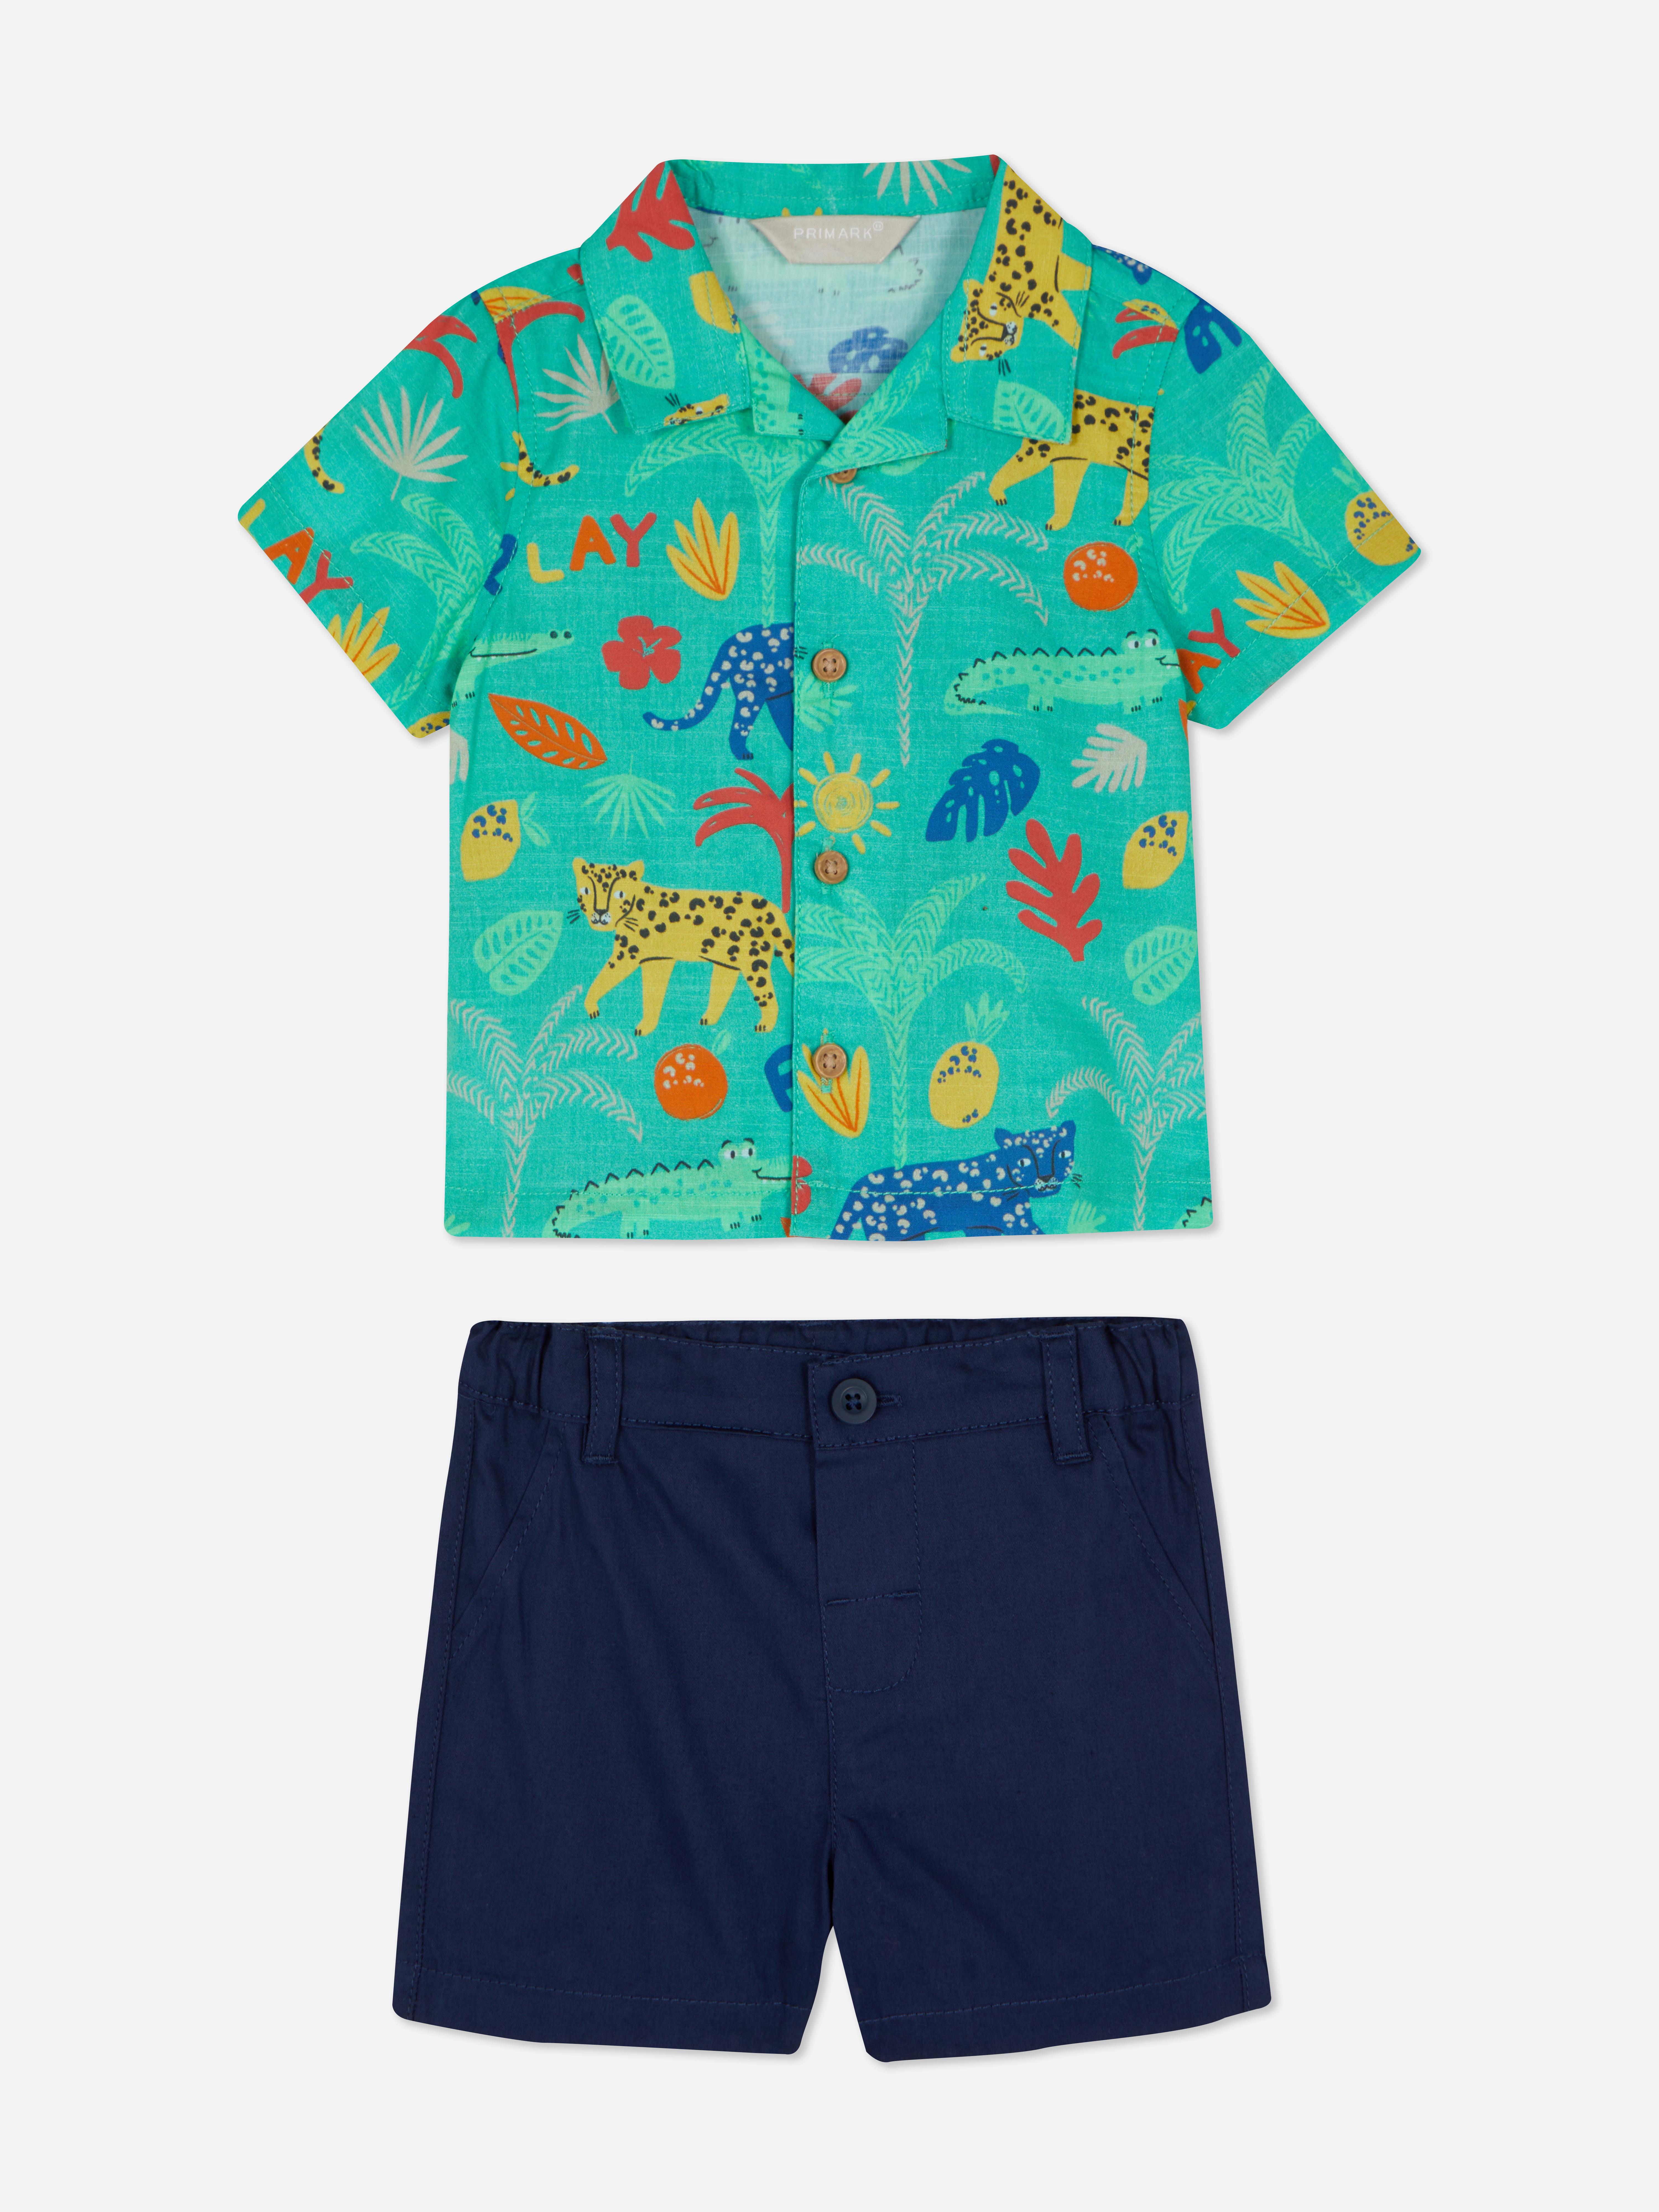 Wild Animal Print Shirt and Short Set